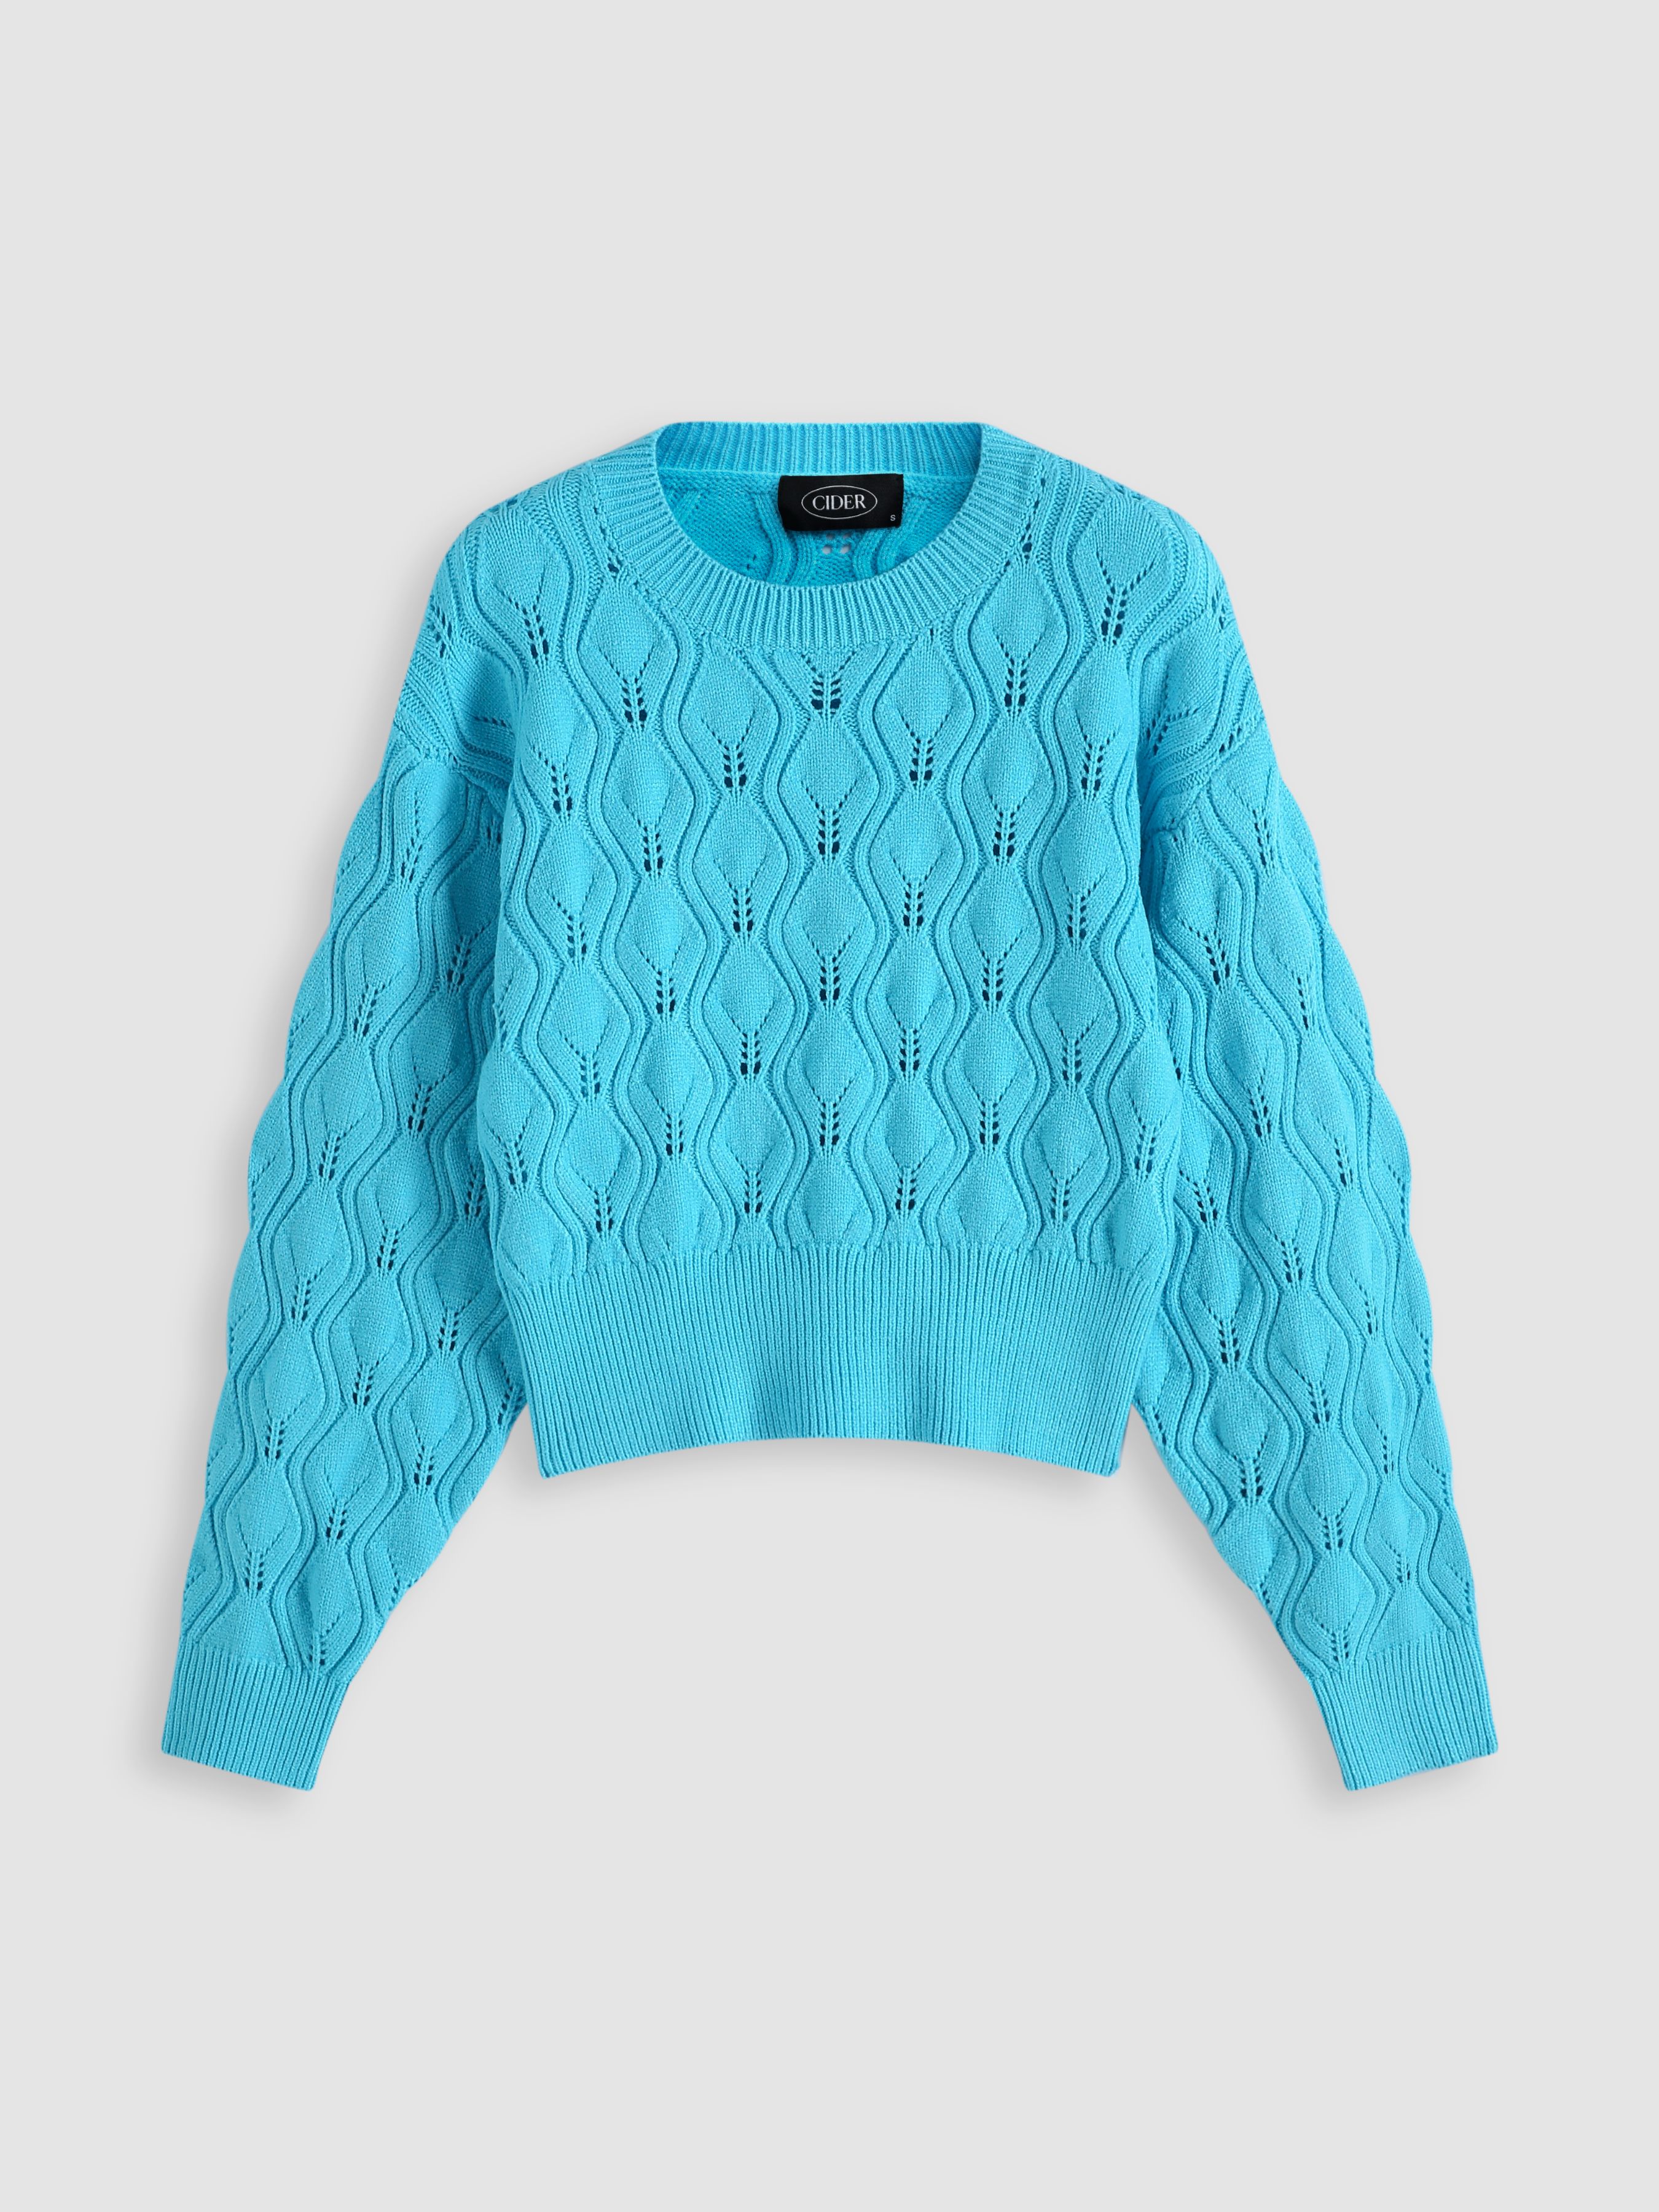 Blue Texture Sweater - Cider